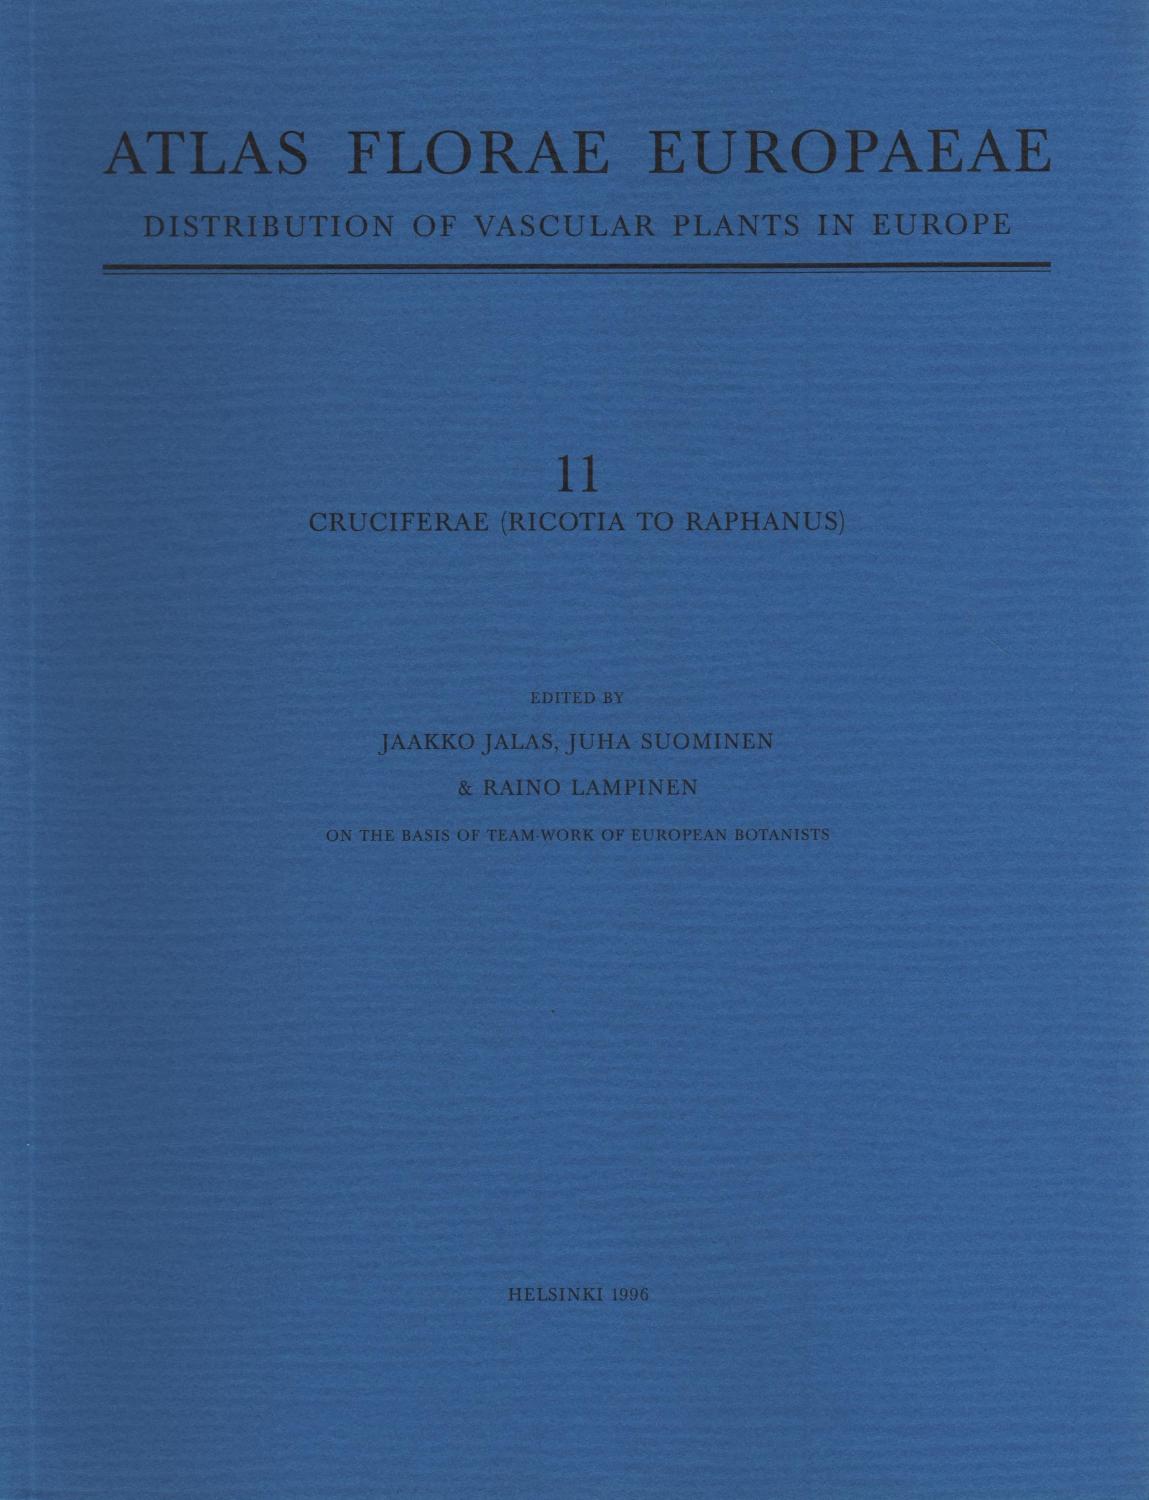 Atlas florae Europaeae / 11, Cruciferae (Ricotia to Raphanus). - Edited by Jaakko Jalas & Juha Suominen on the basis of a team of European botanists